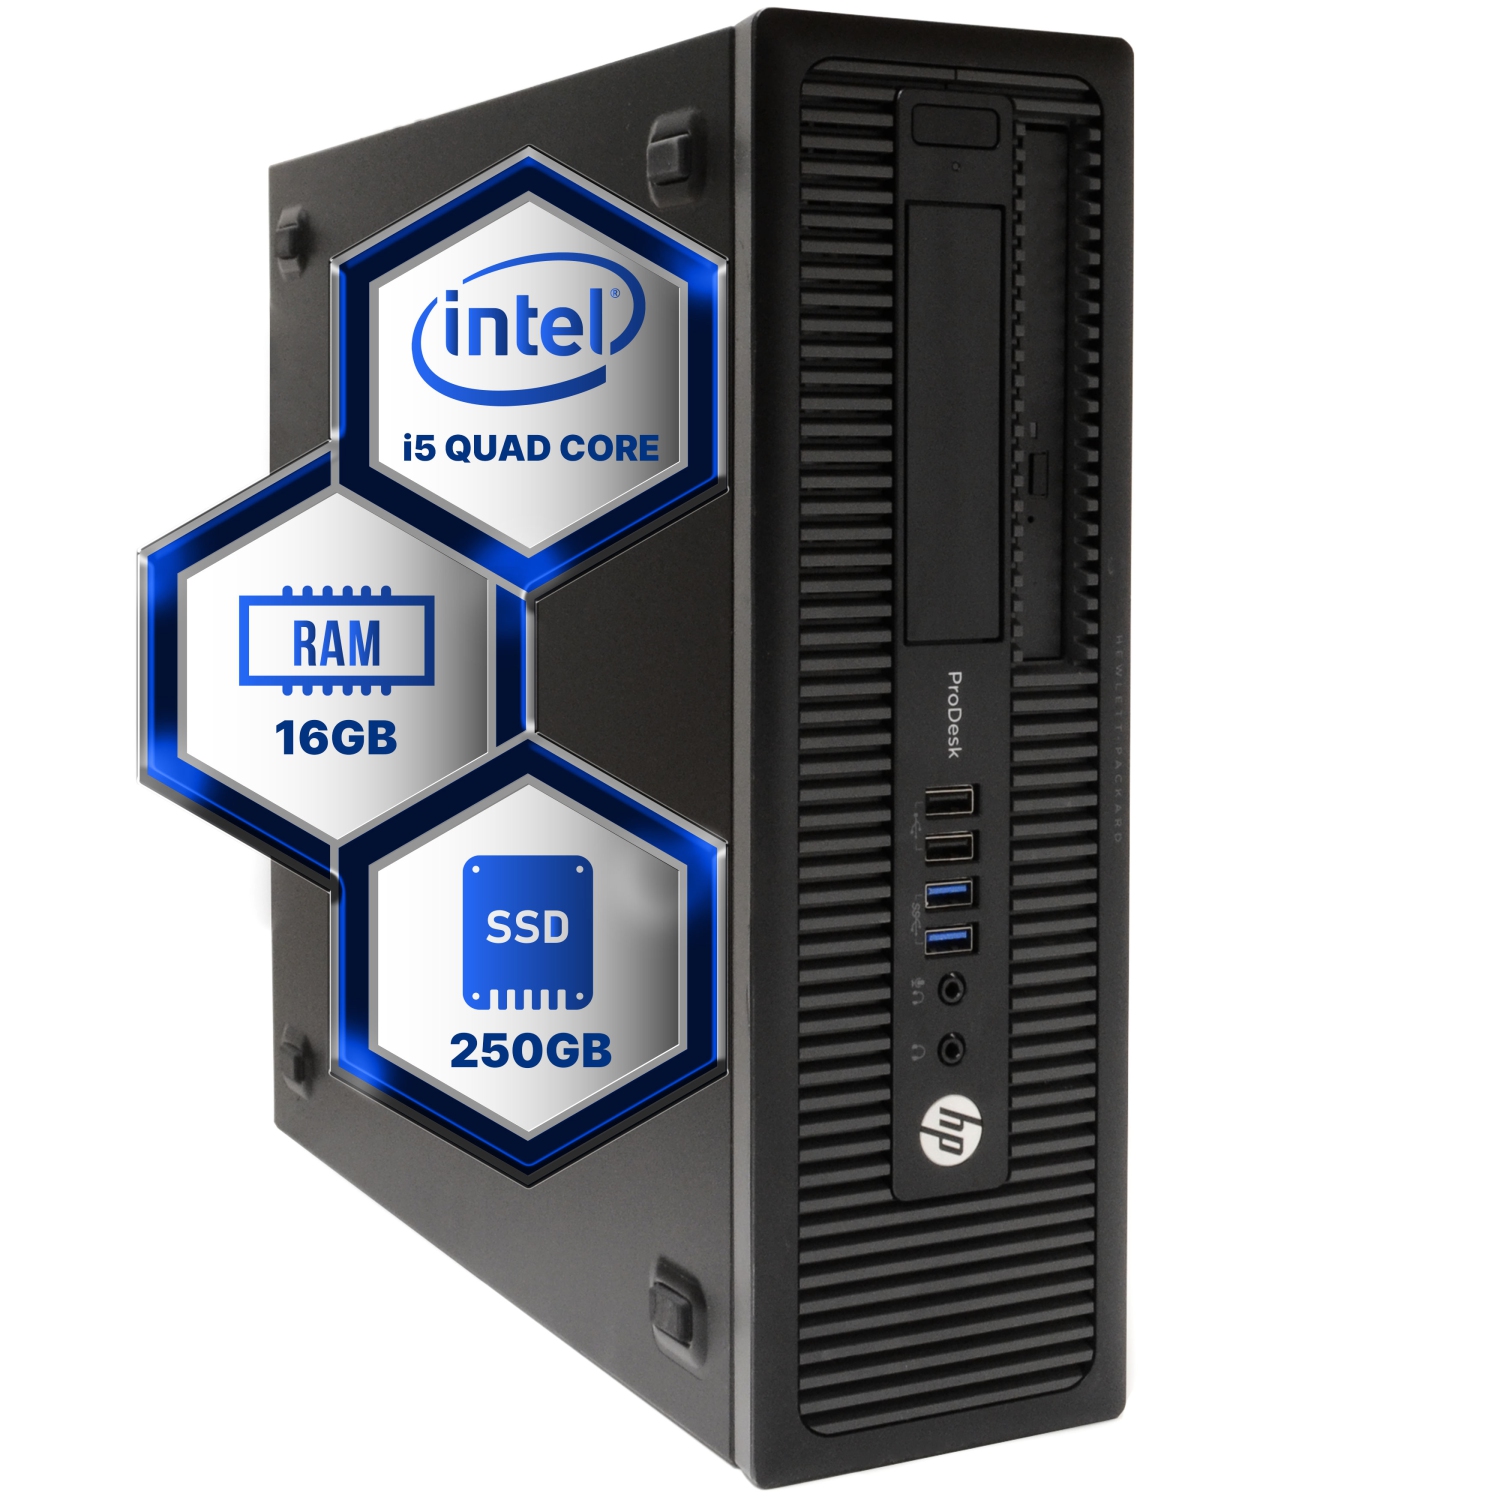 Refurbished (Good) HP ProDesk 4th Gen Desktop Computer | Quad Core Intel i5 (3.2) | 16GB DDR3 RAM | 250GB SSD | Windows 10 Professional | Home or Office PC